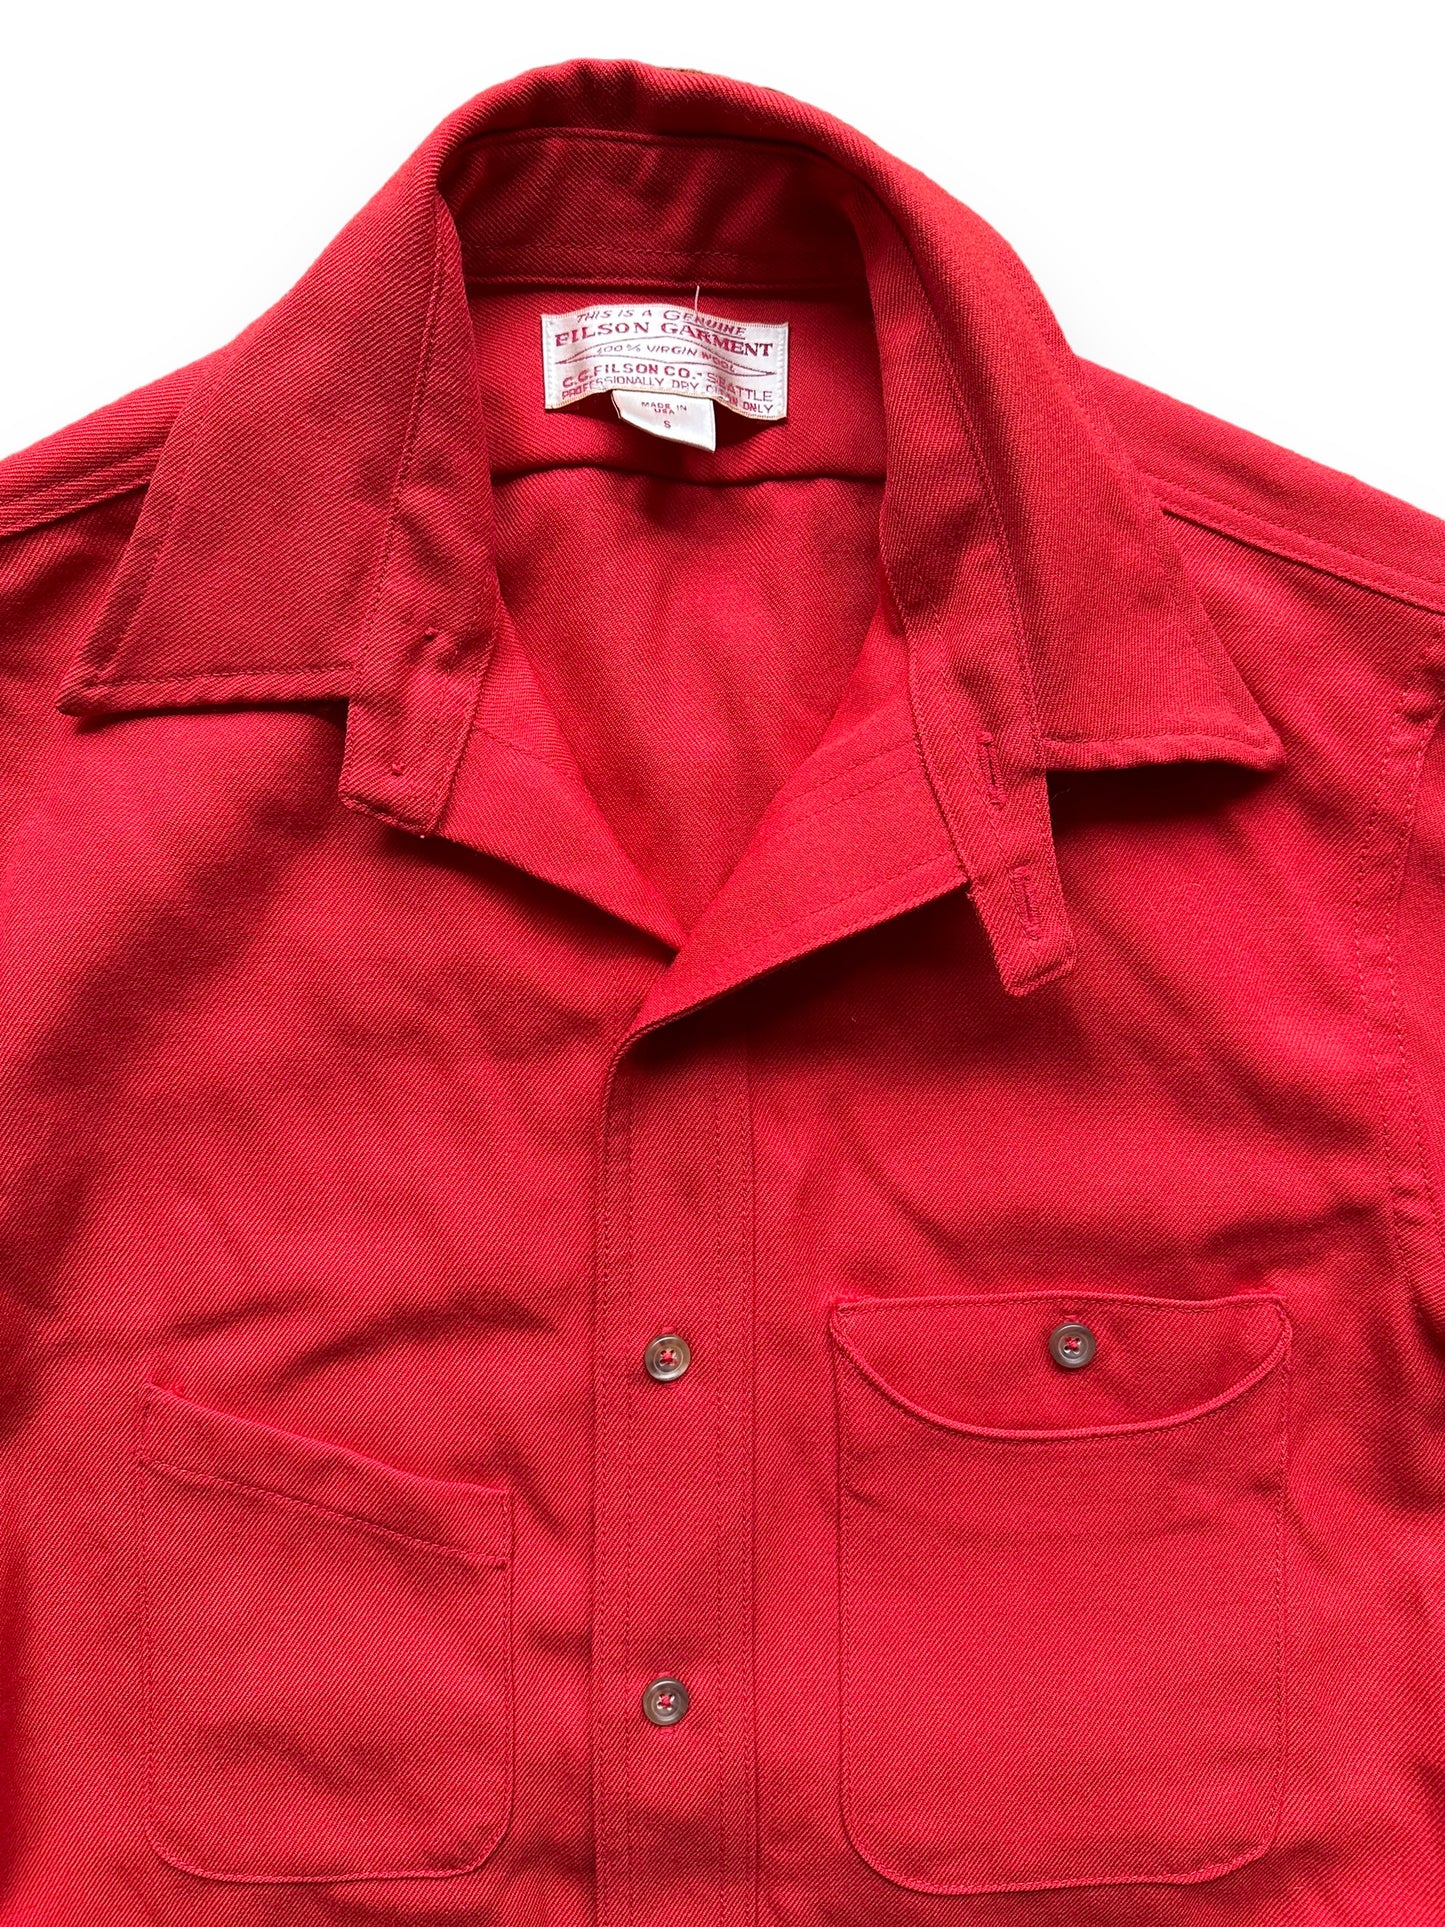 collar of Filson Merino Wool Red Scout Shirt |  Barn Owl Vintage Goods | Vintage Filson Workwear Seattle